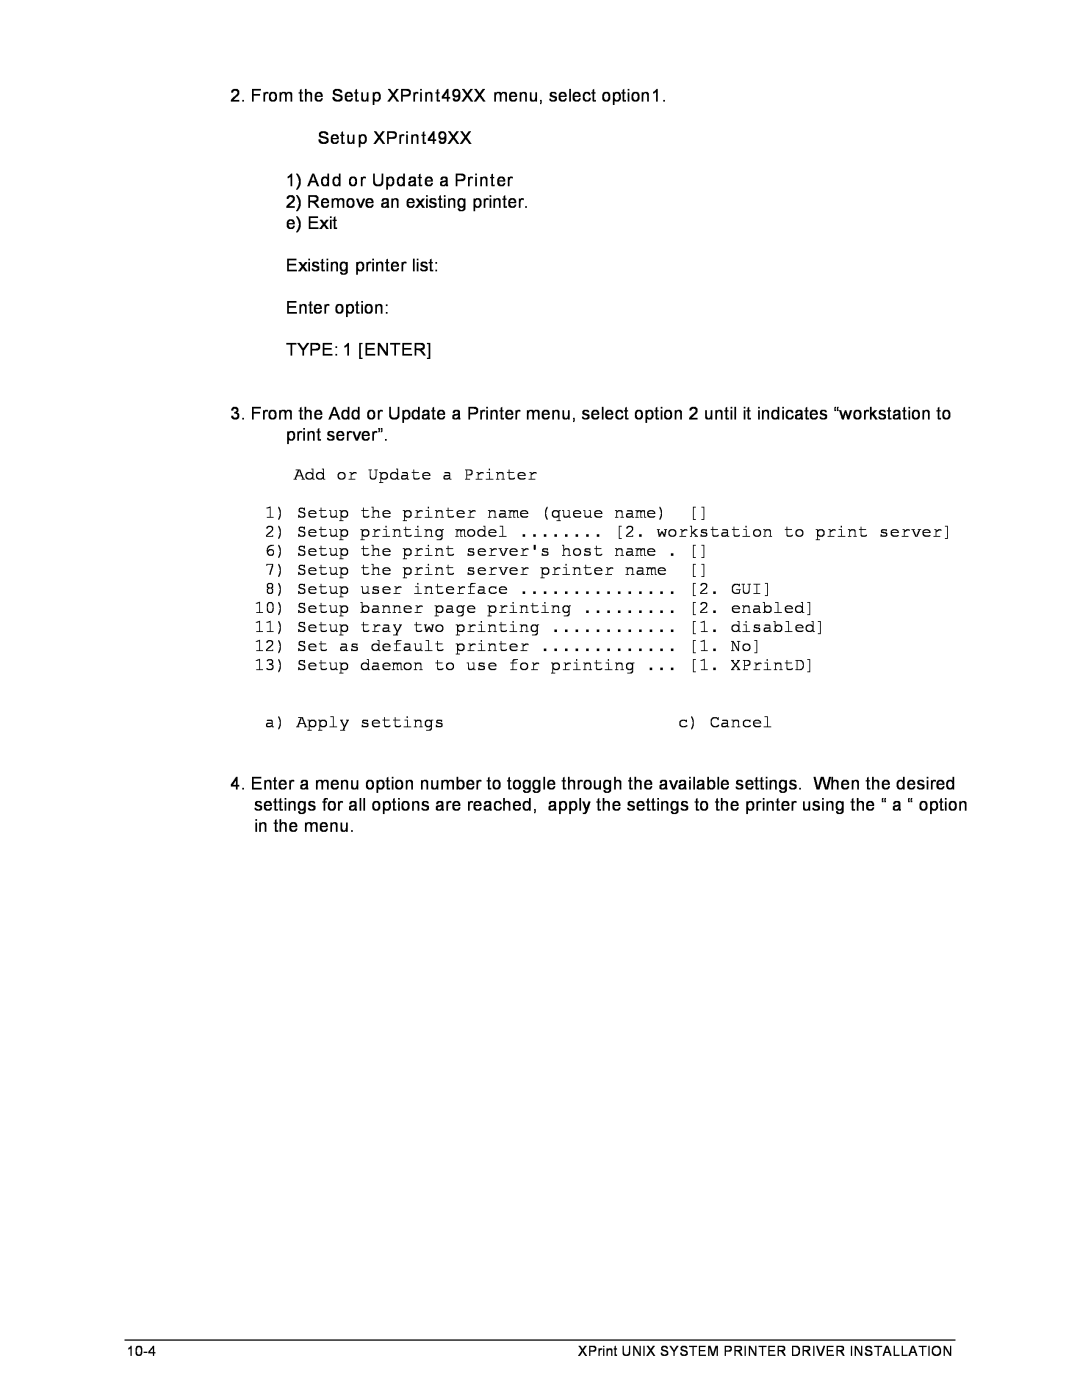 Xerox 701P91273 manual Setup XPrint49XX 1Add or Update a Printer, TYPE: 1 ENTER 